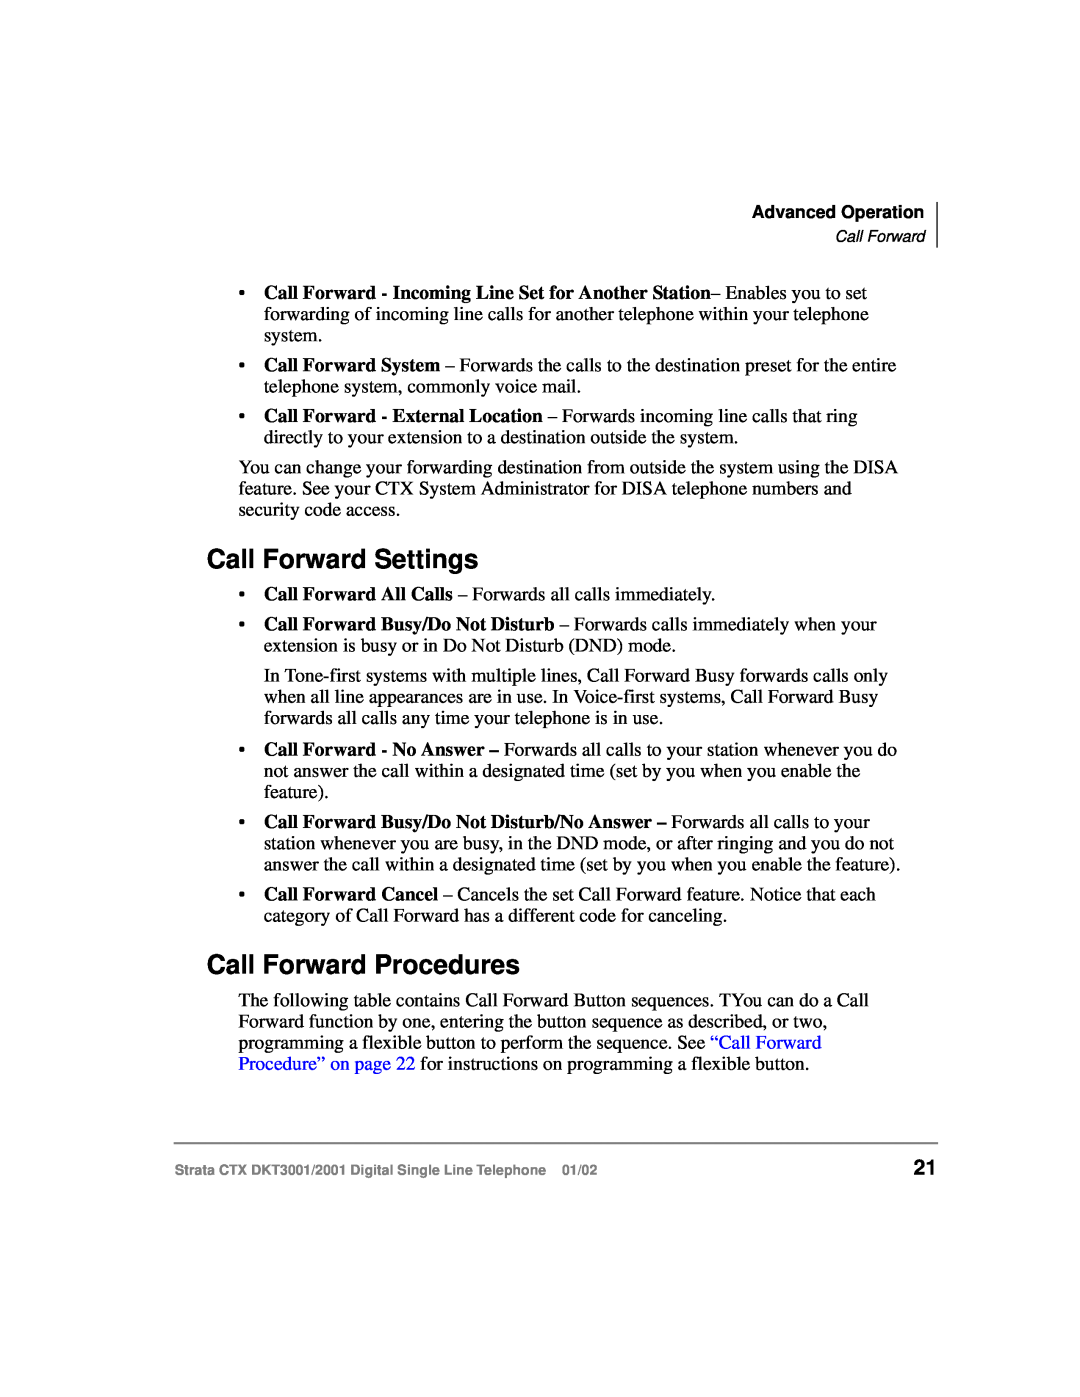 Toshiba 2001, DXT3001 manual Call Forward Settings, Call Forward Procedures 